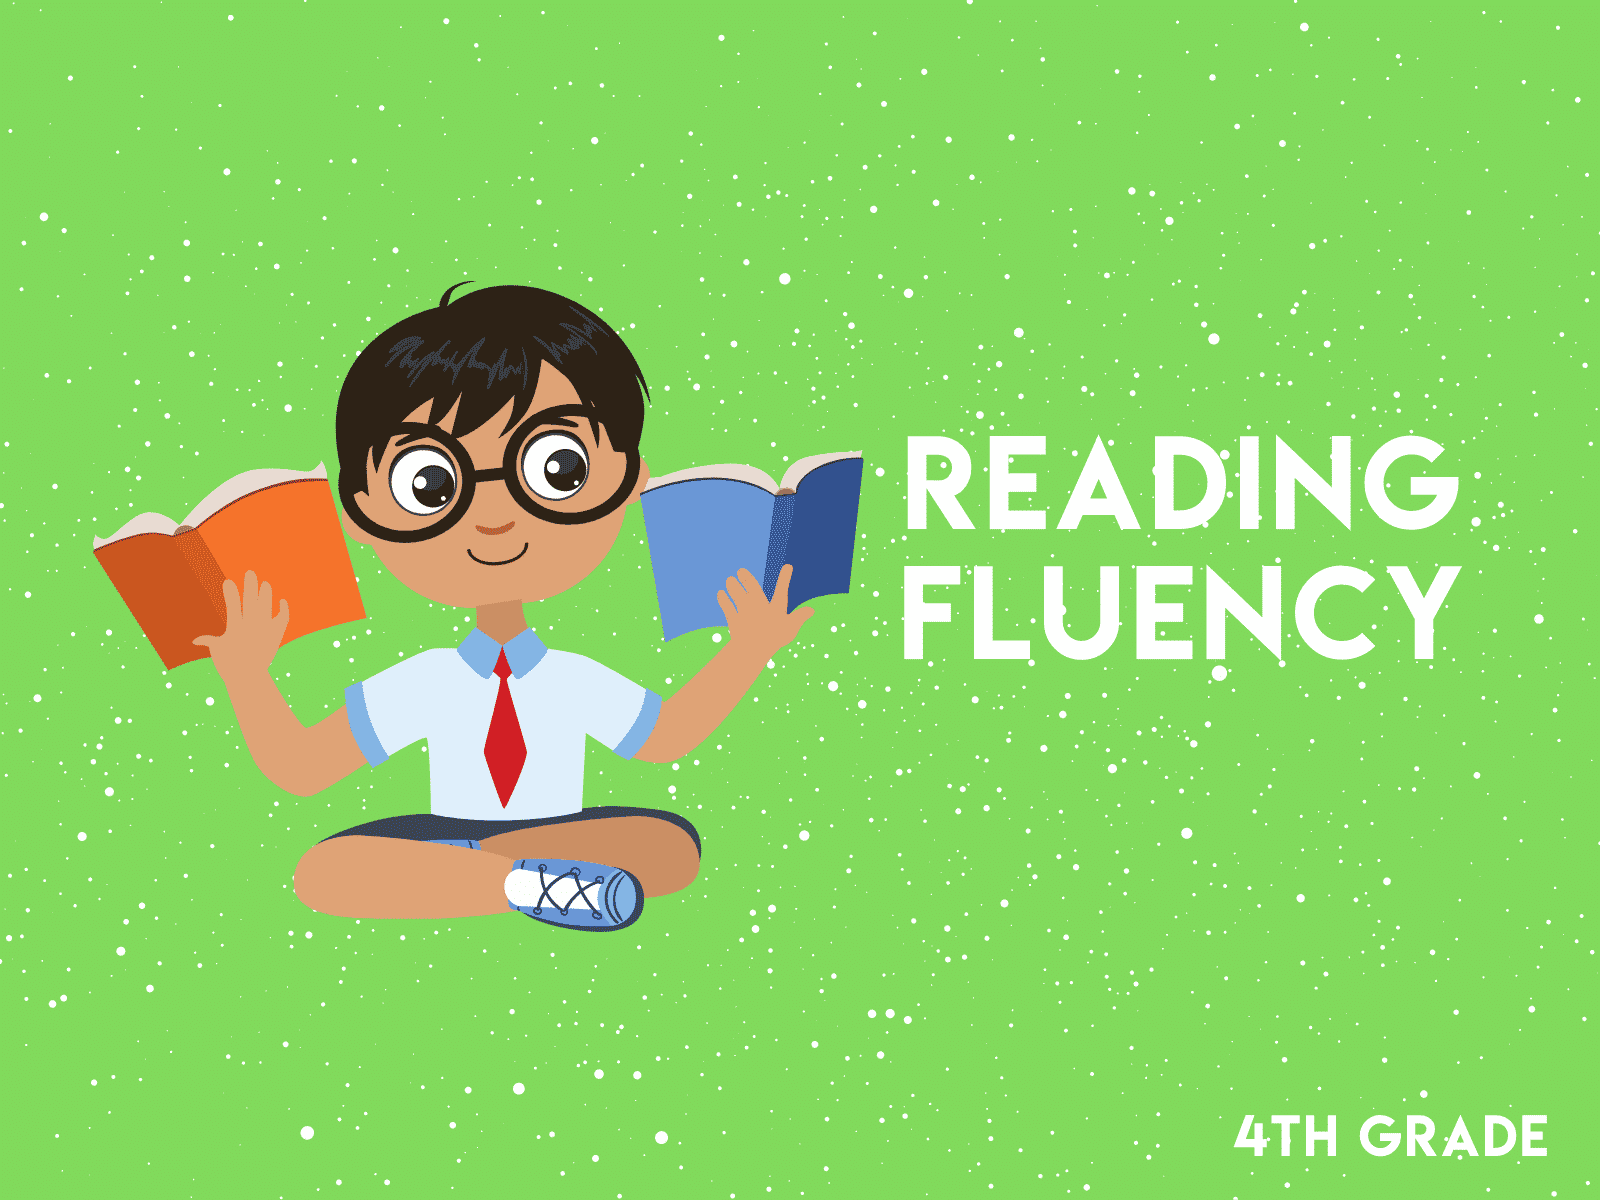 Free fourth grade reading fluency workbook.